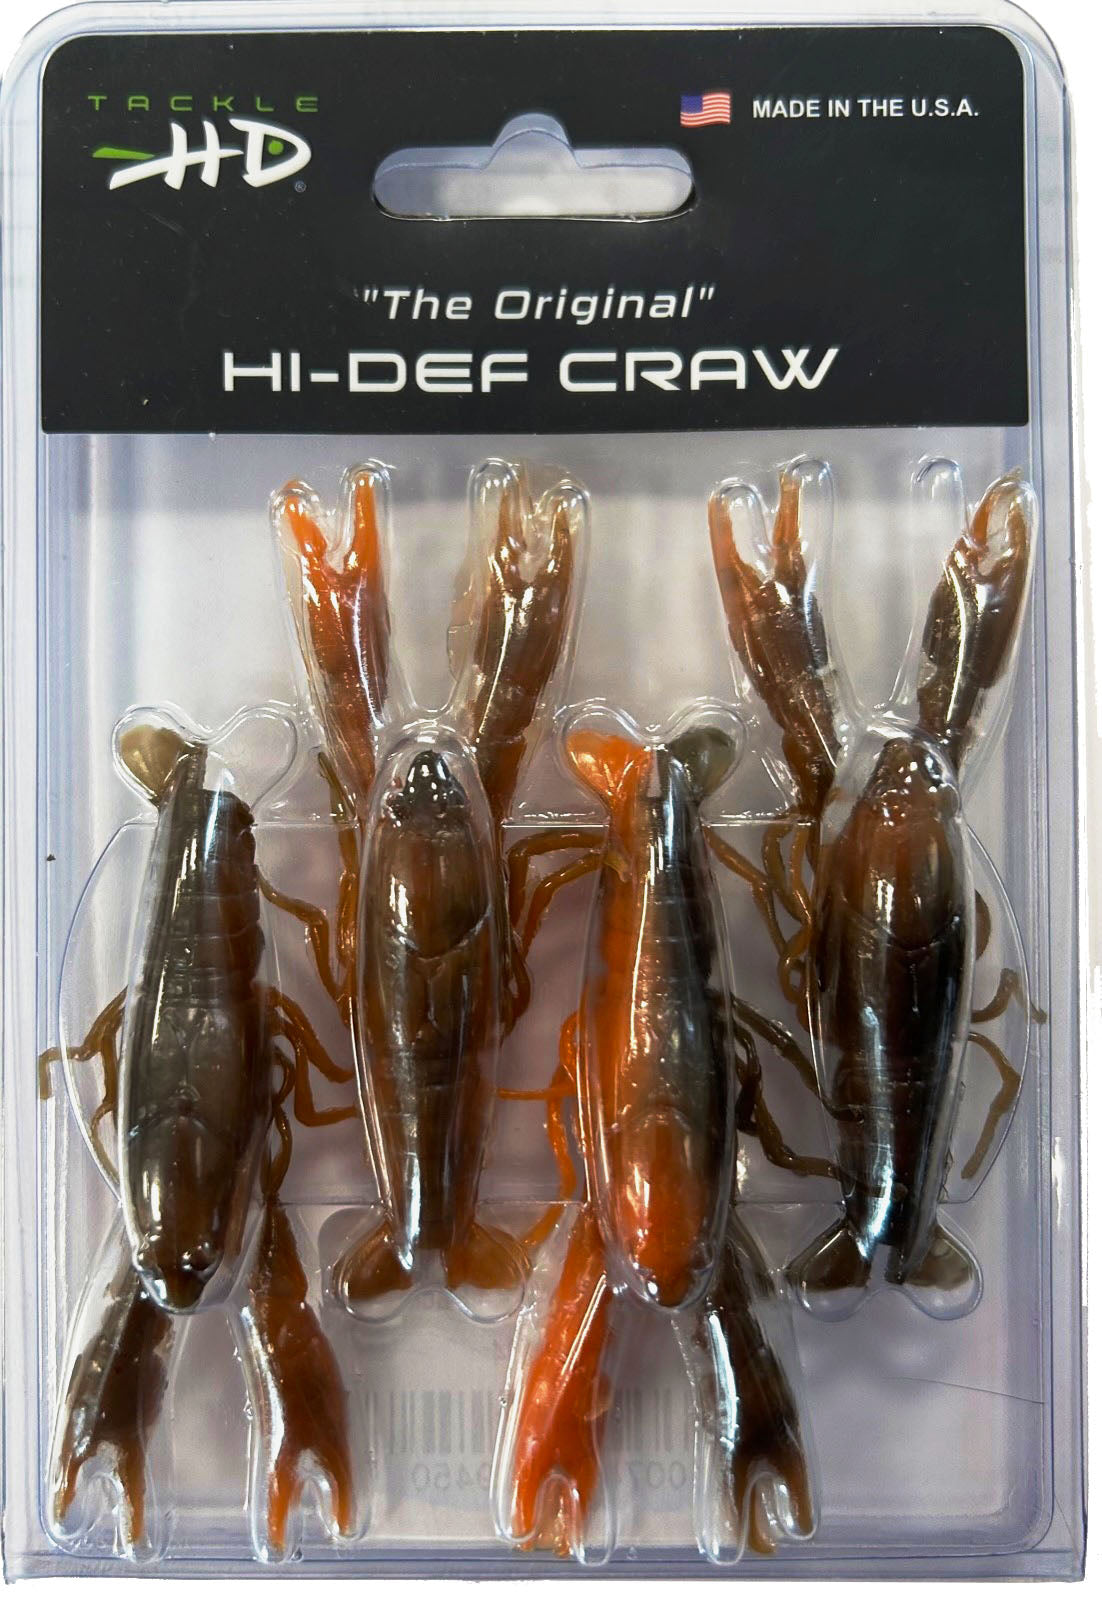 Hi-Def Craw 3-inch 4-pack - Brown and Orange – Tackle HD